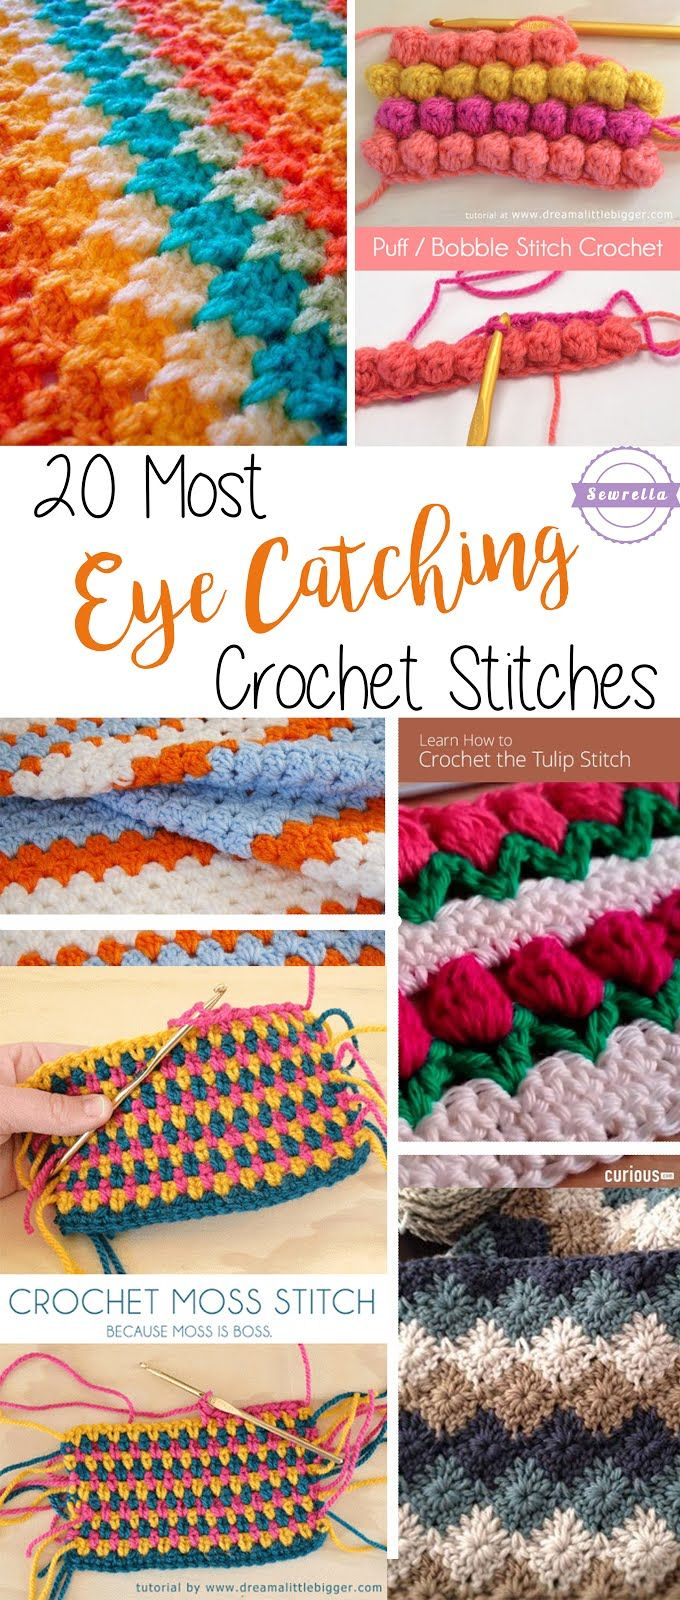 Unique Crochet Patterns 20 Most Eye Catching Crochet Stitches Crafts Crochet Pinterest